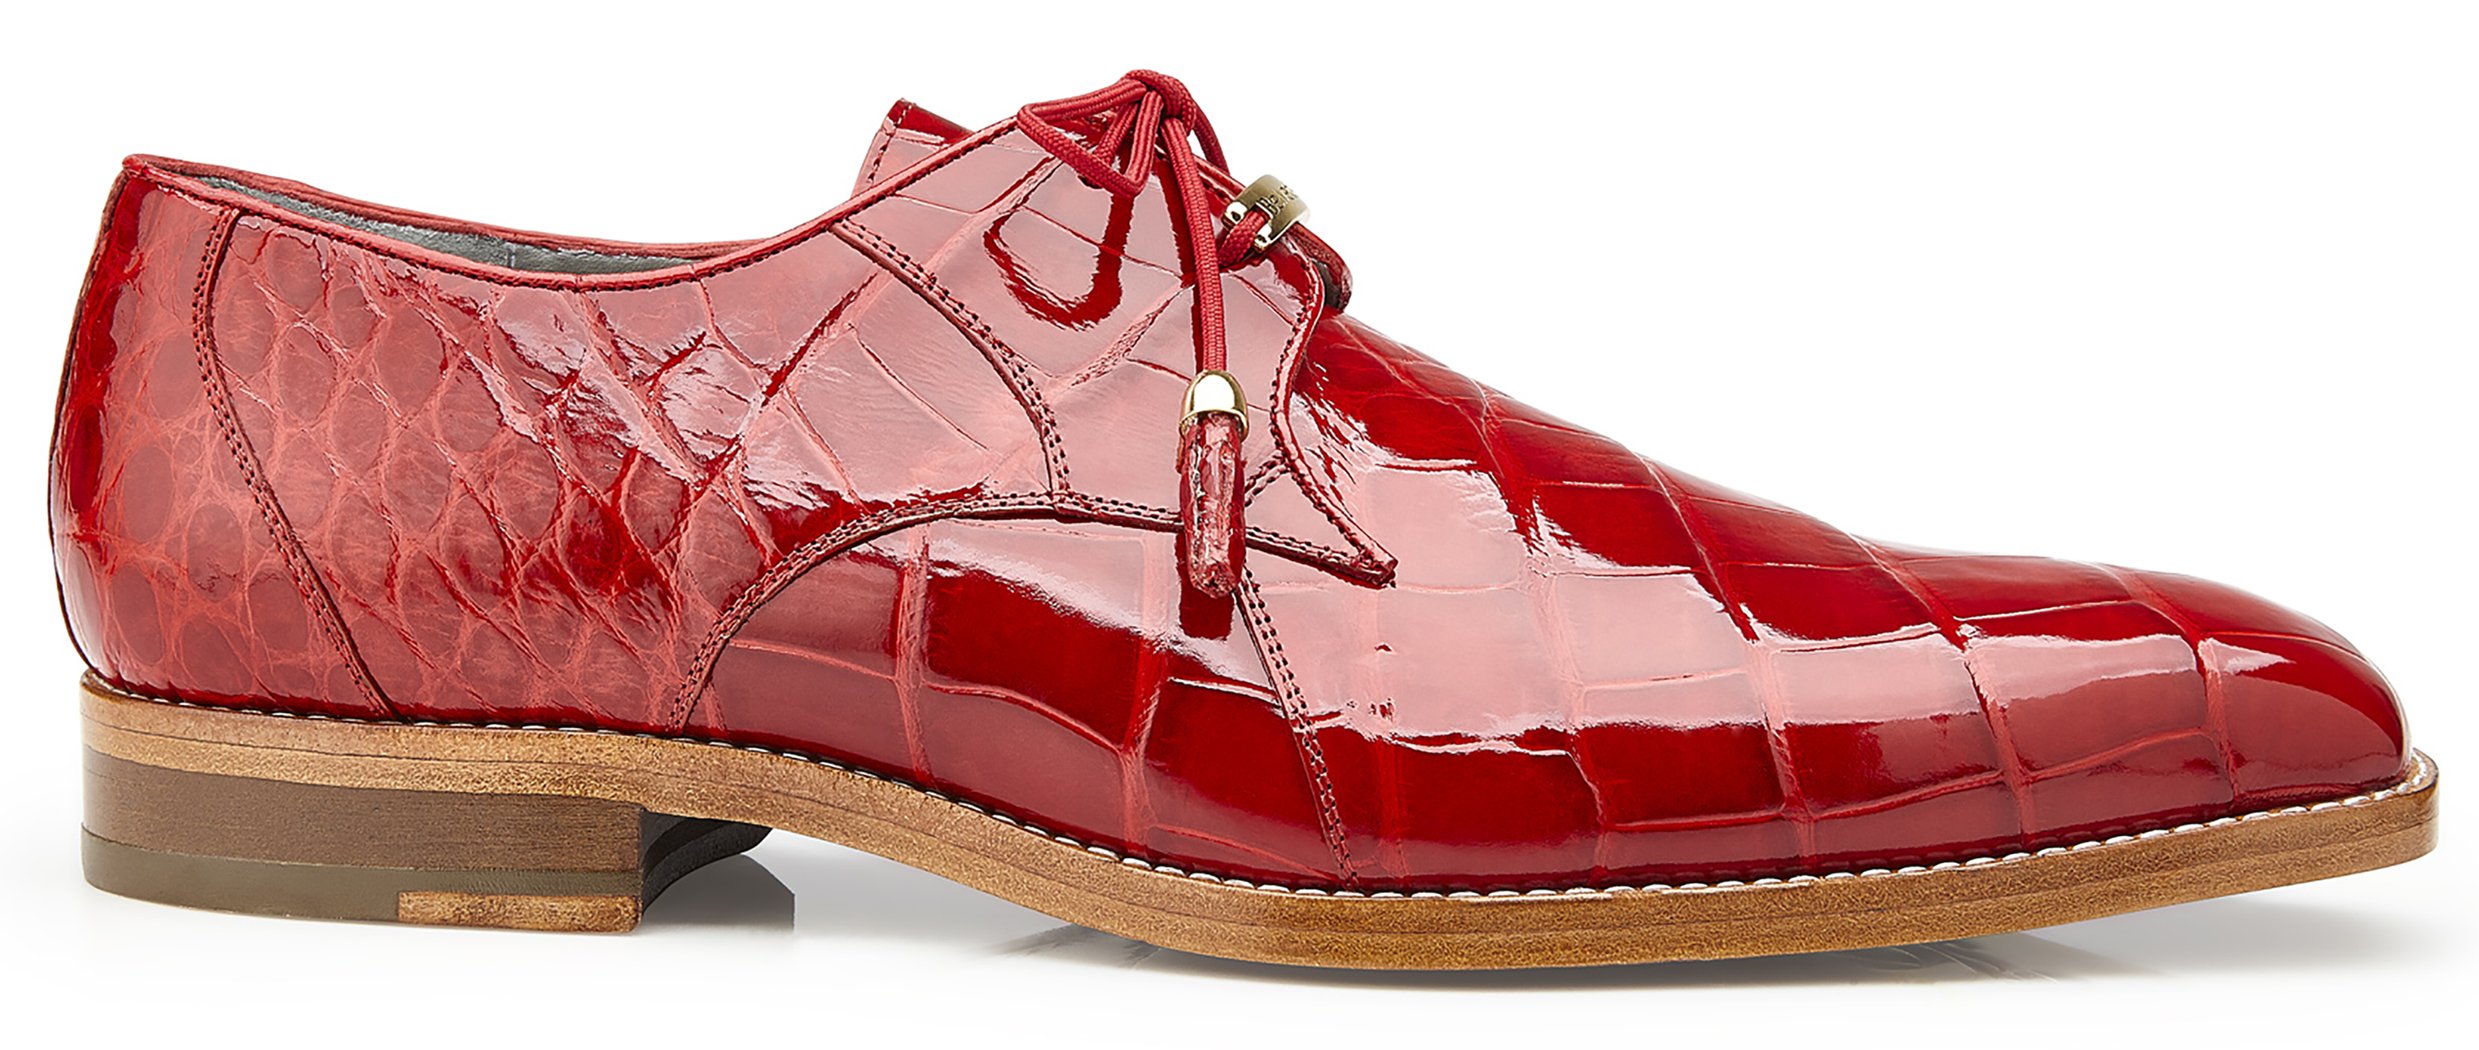 belvedere red alligator shoe